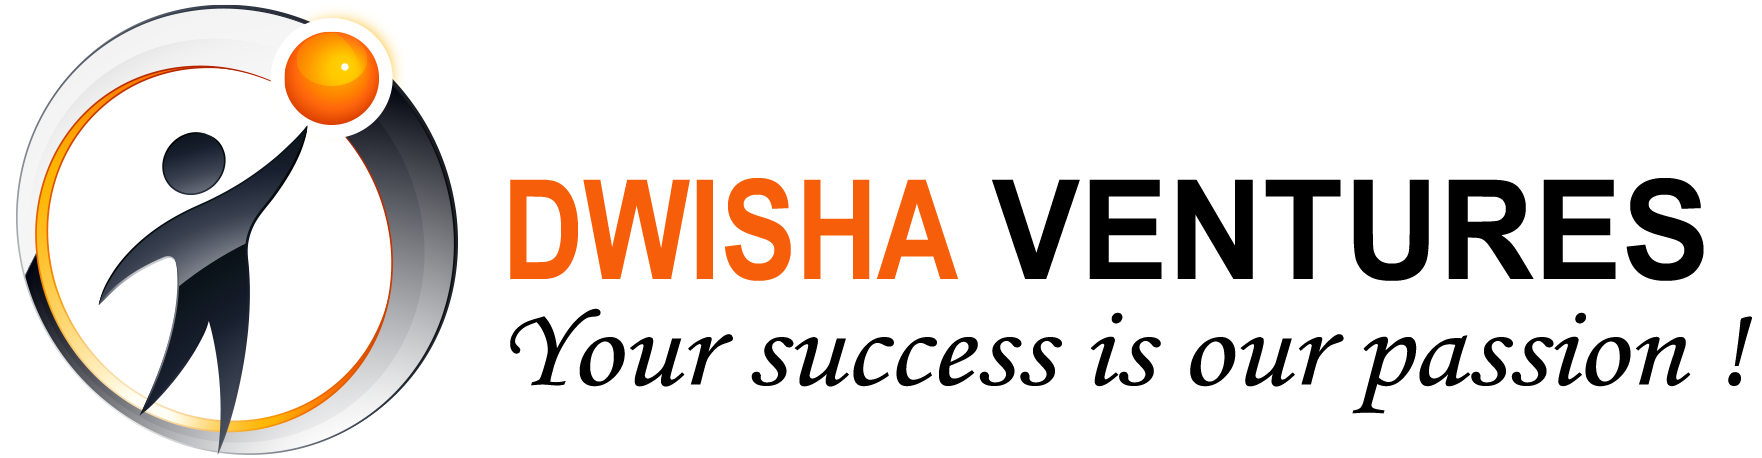 DwiShavVnturesCom_logo